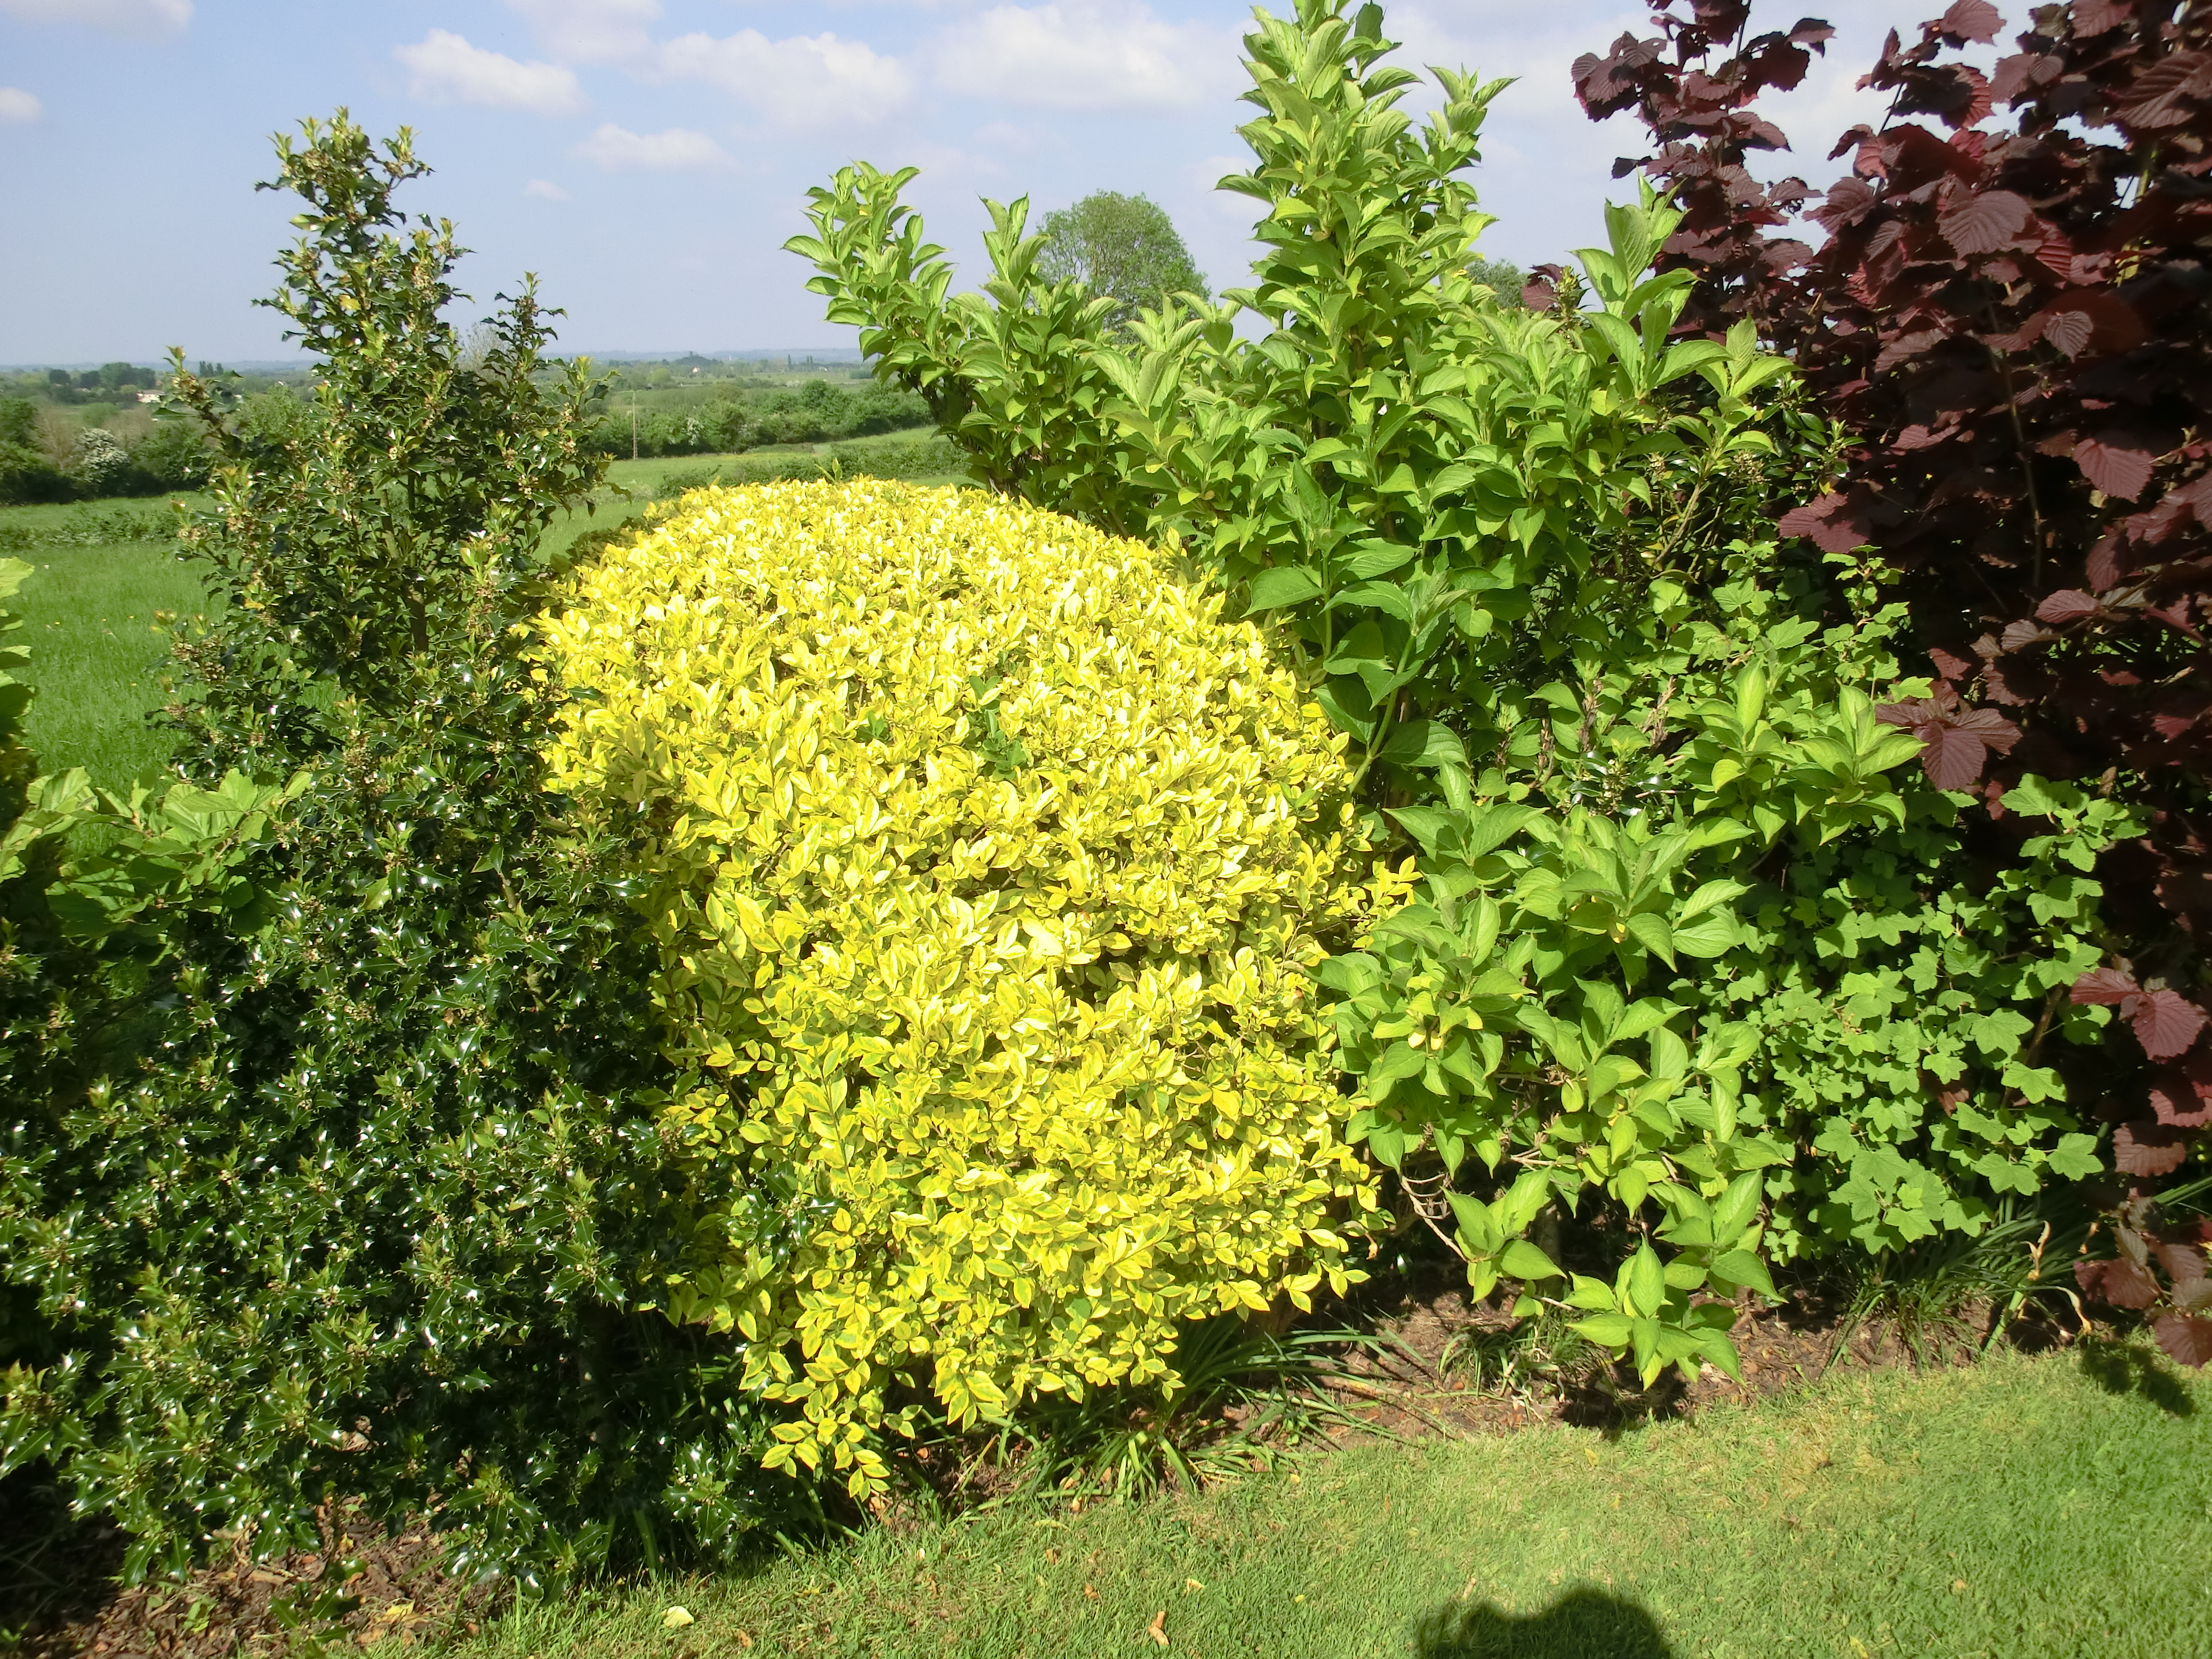 Flowering hedges for year round interest in your garden.